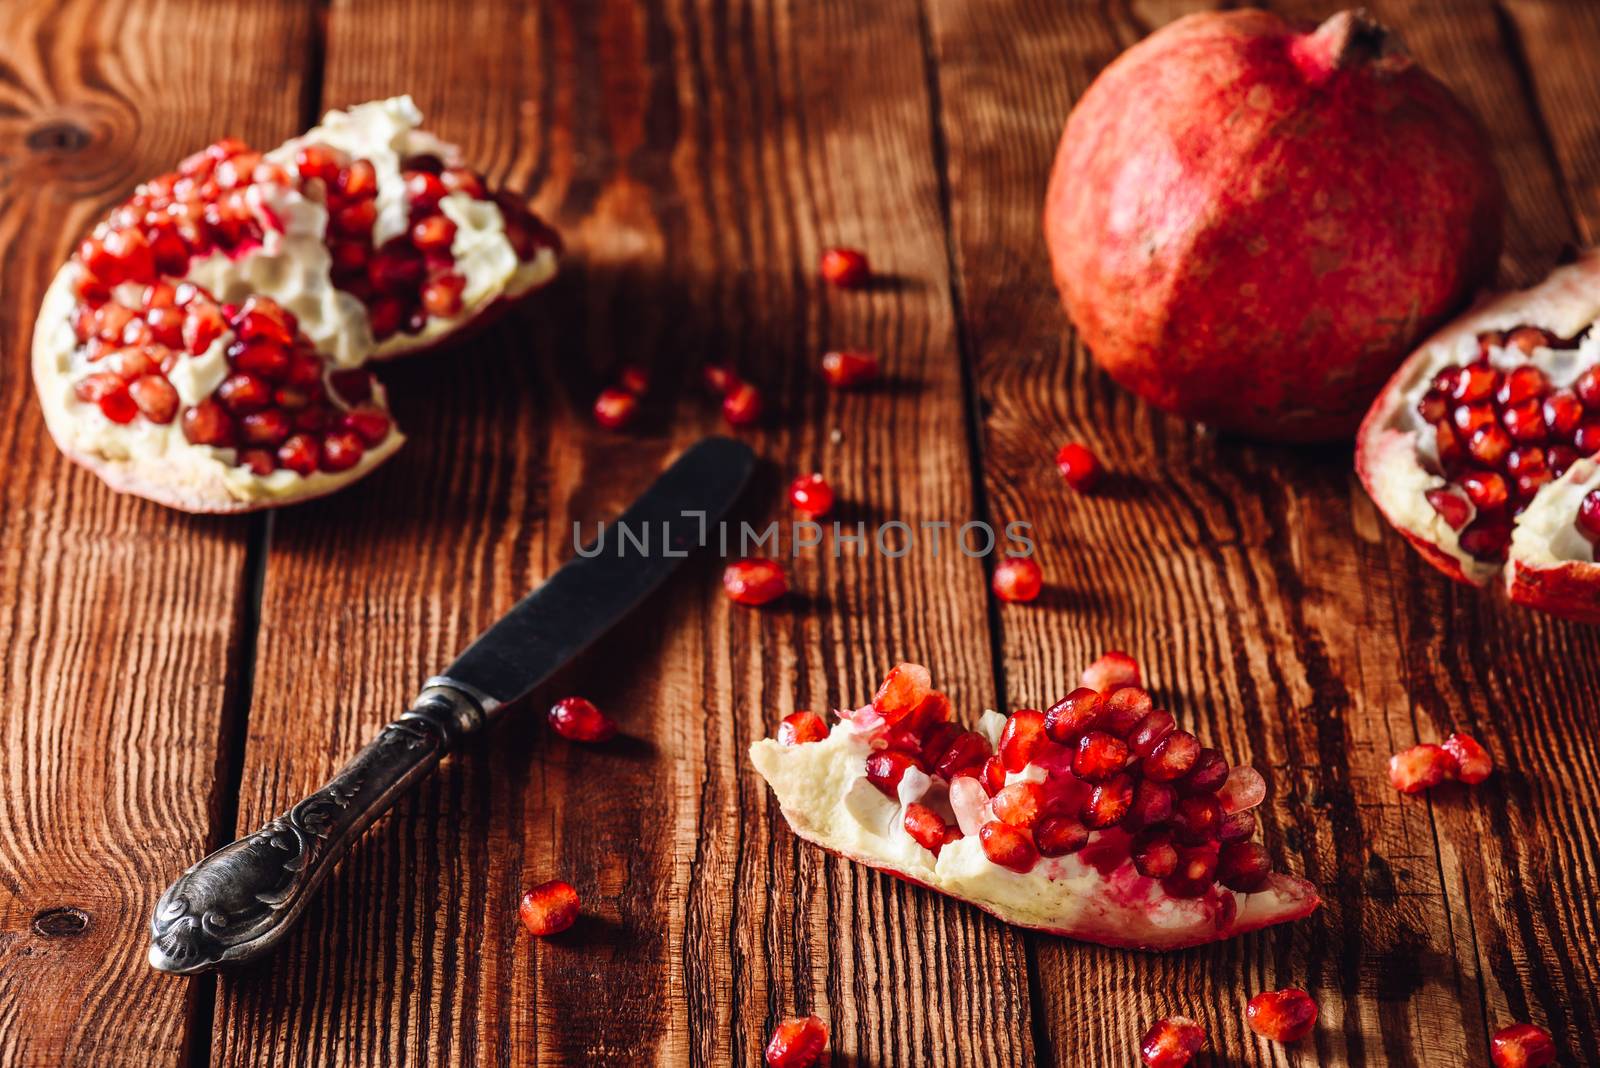 Opened Pomegranate Fruit and Knife by Seva_blsv